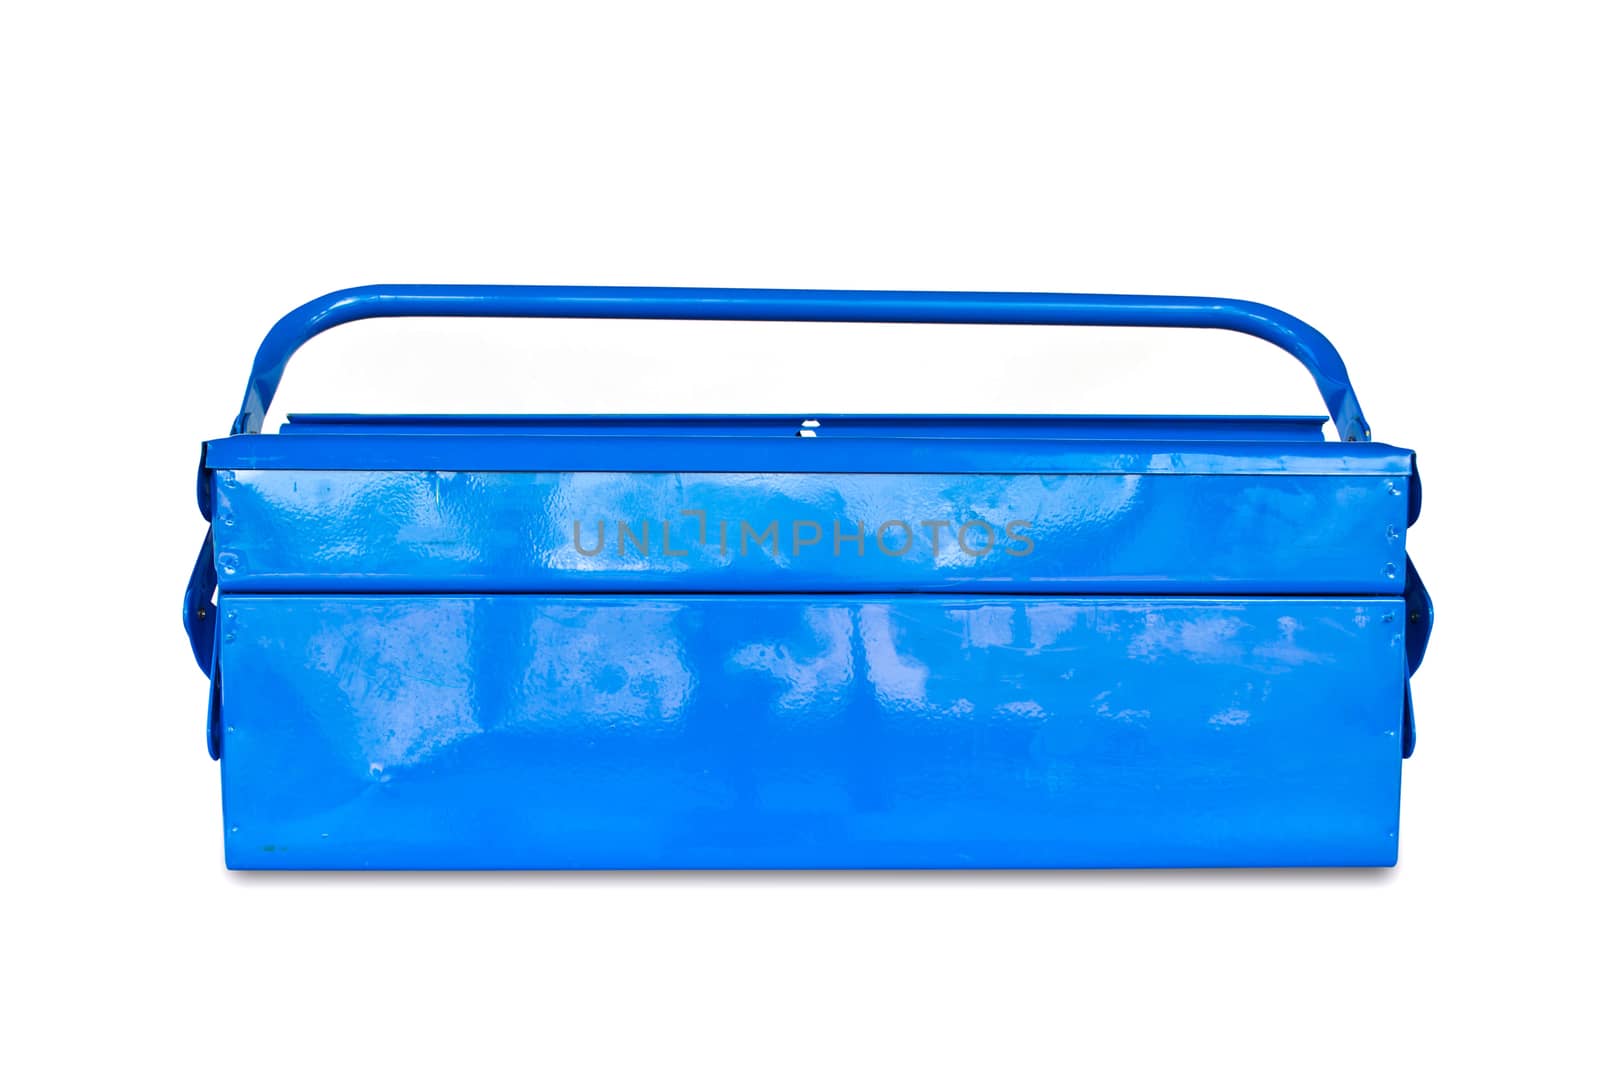 Blue tool box isolated on white background by Thanamat